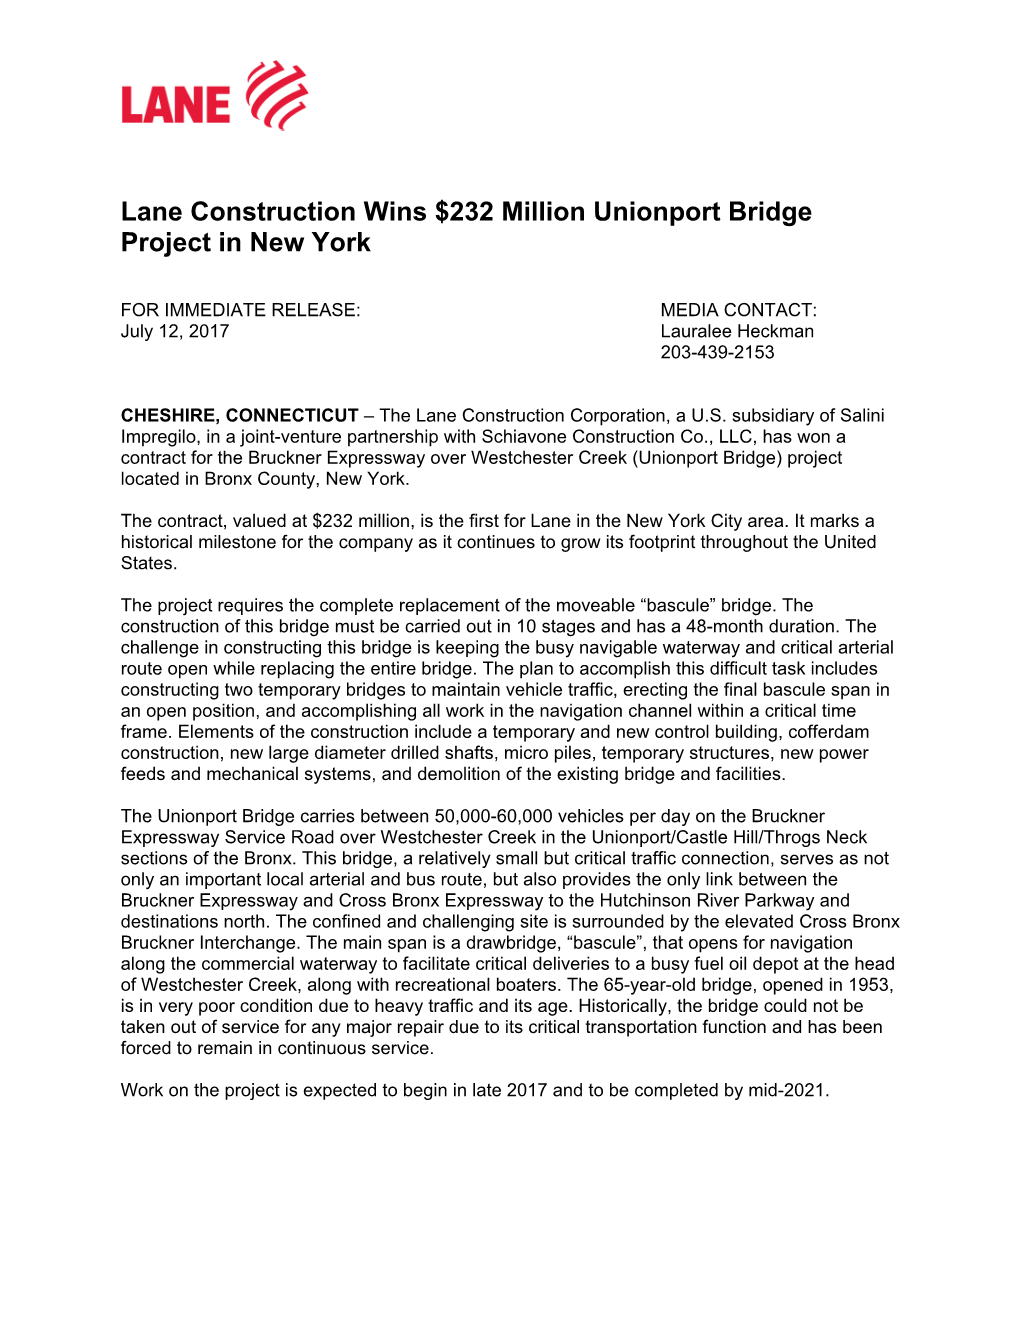 Lane Construction Wins $232 Million Unionport Bridge Project in New York